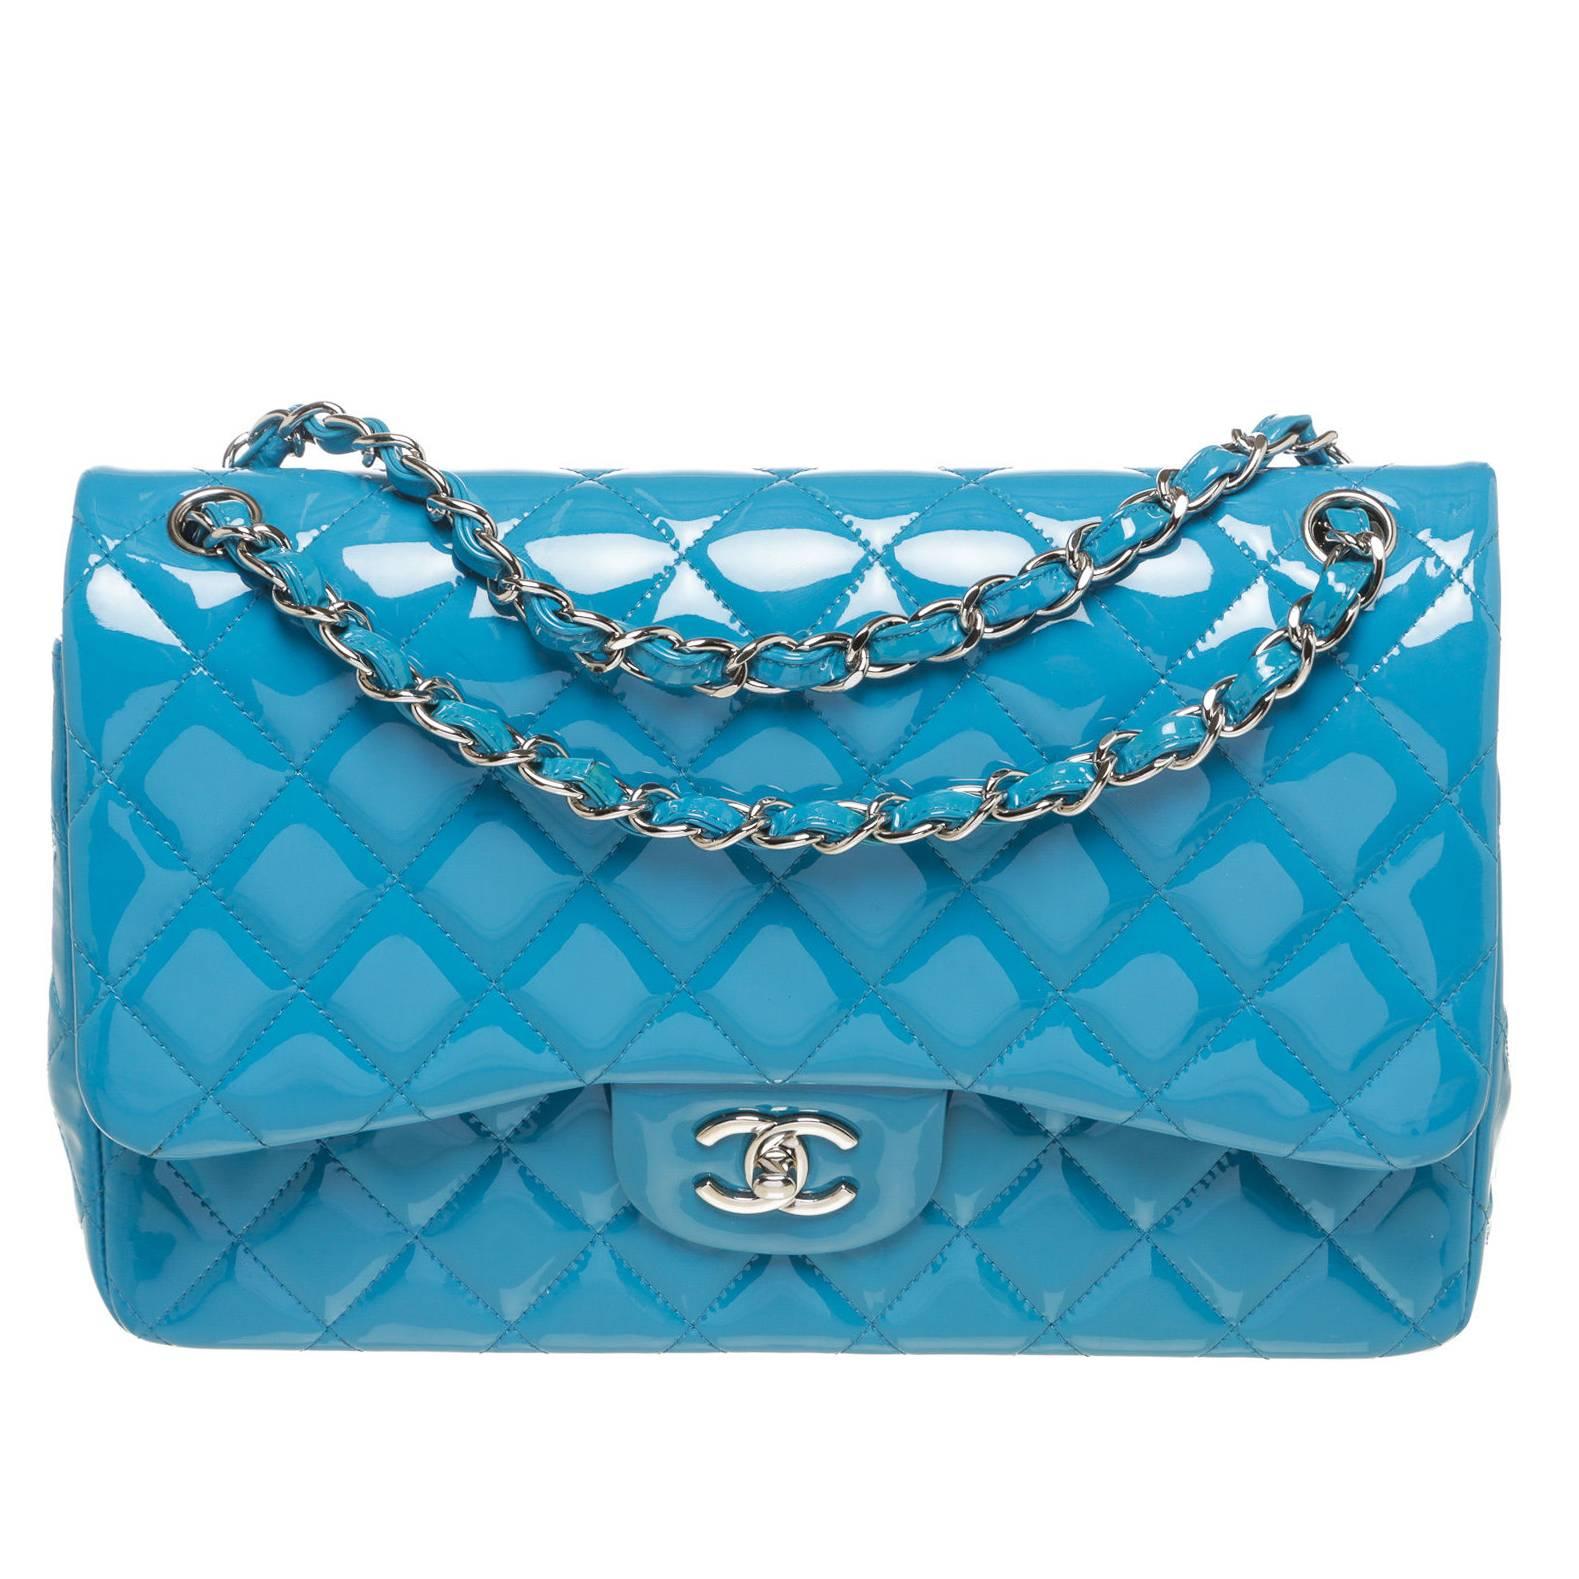 Chanel Blue Quilted Patent Leather Jumbo Flap Shoulder Handbag For Sale